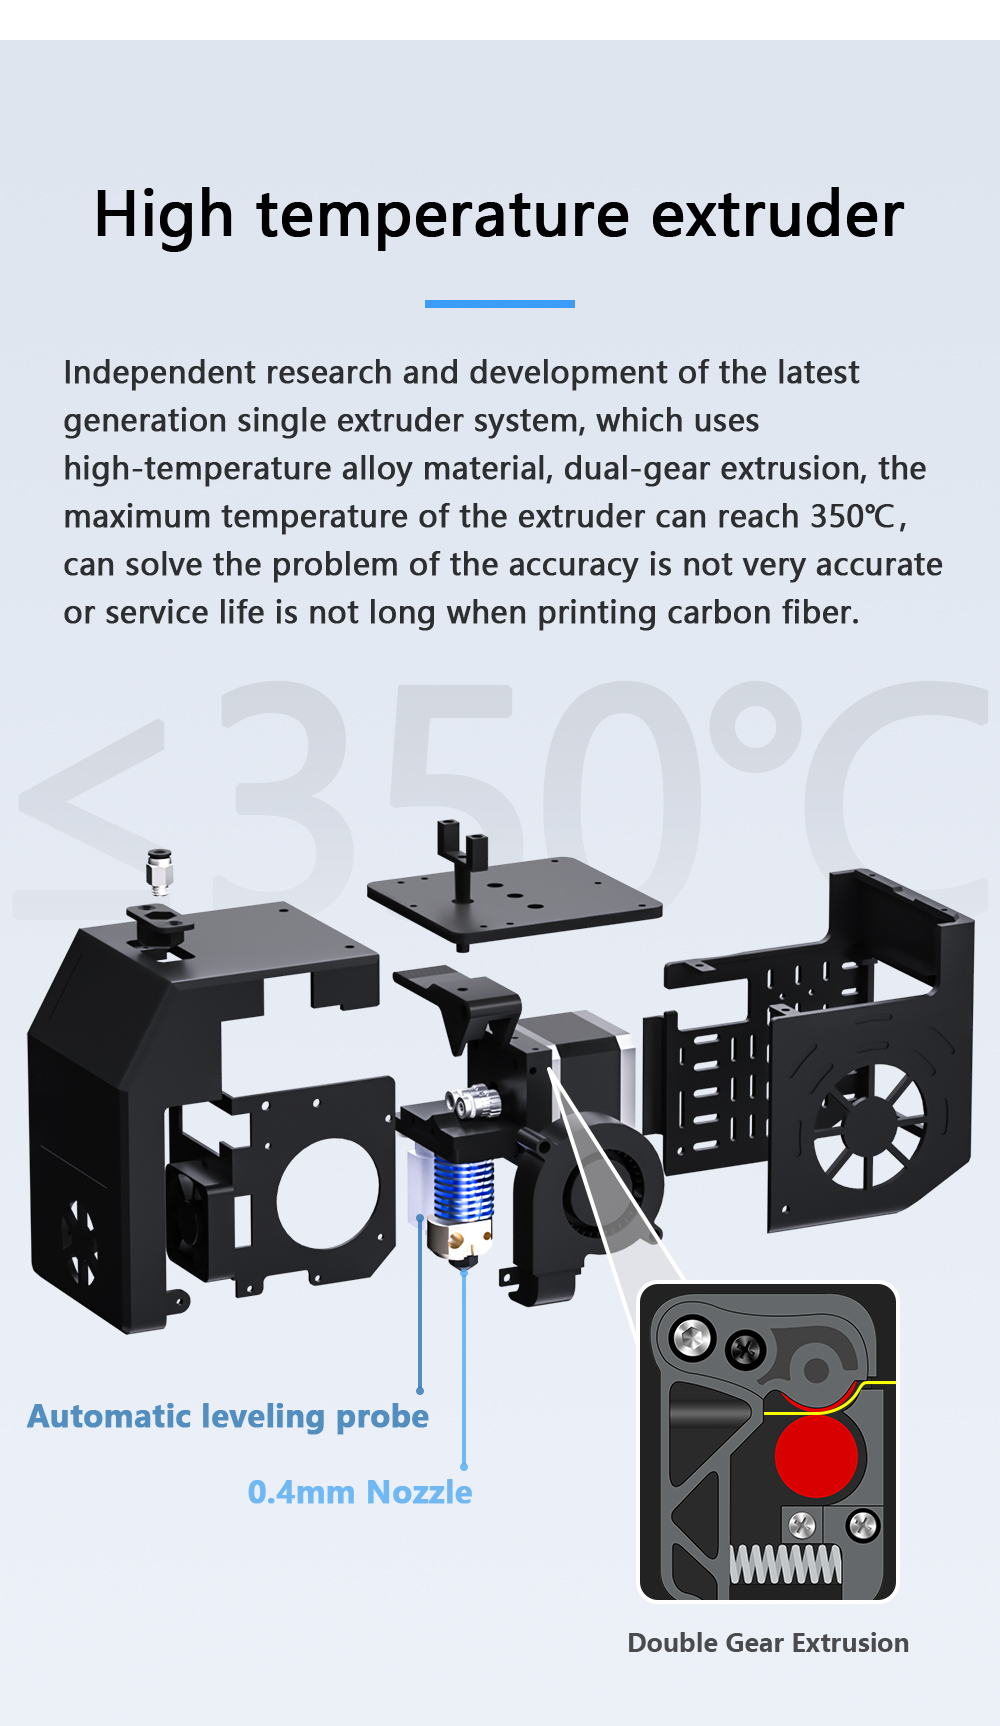 QIDI TECH X-CF Pro 3D-Drucker in Industriequalität